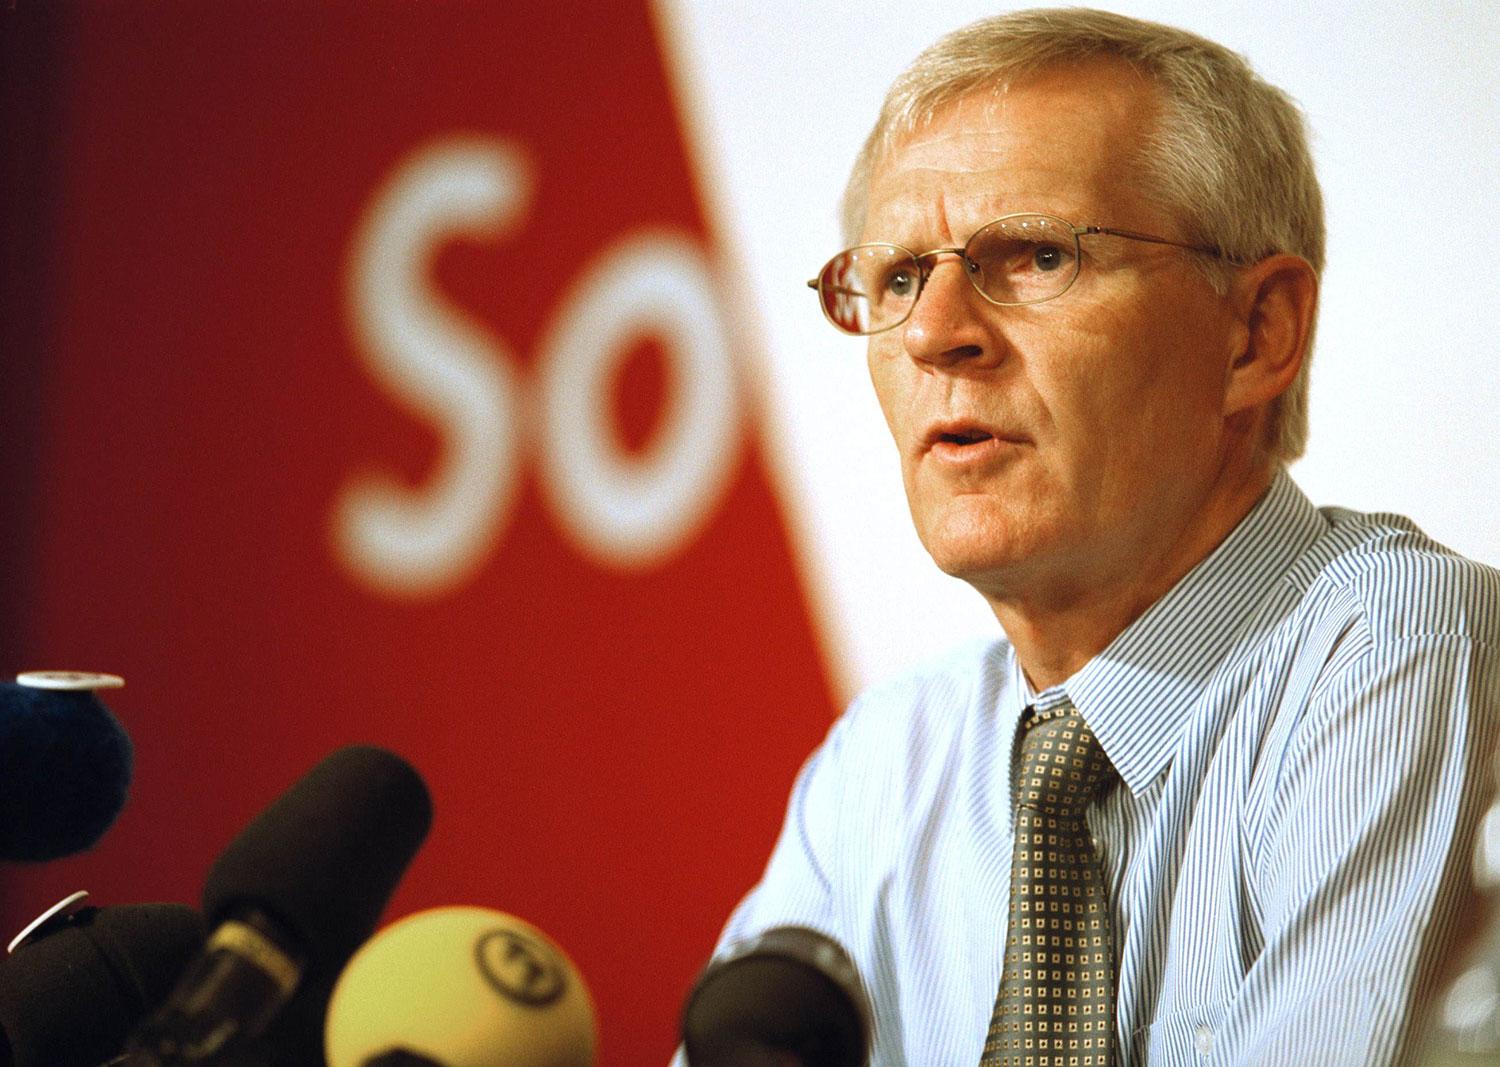 Bosse Ringholm (S) var finansminister mellan 1999 och 2004.